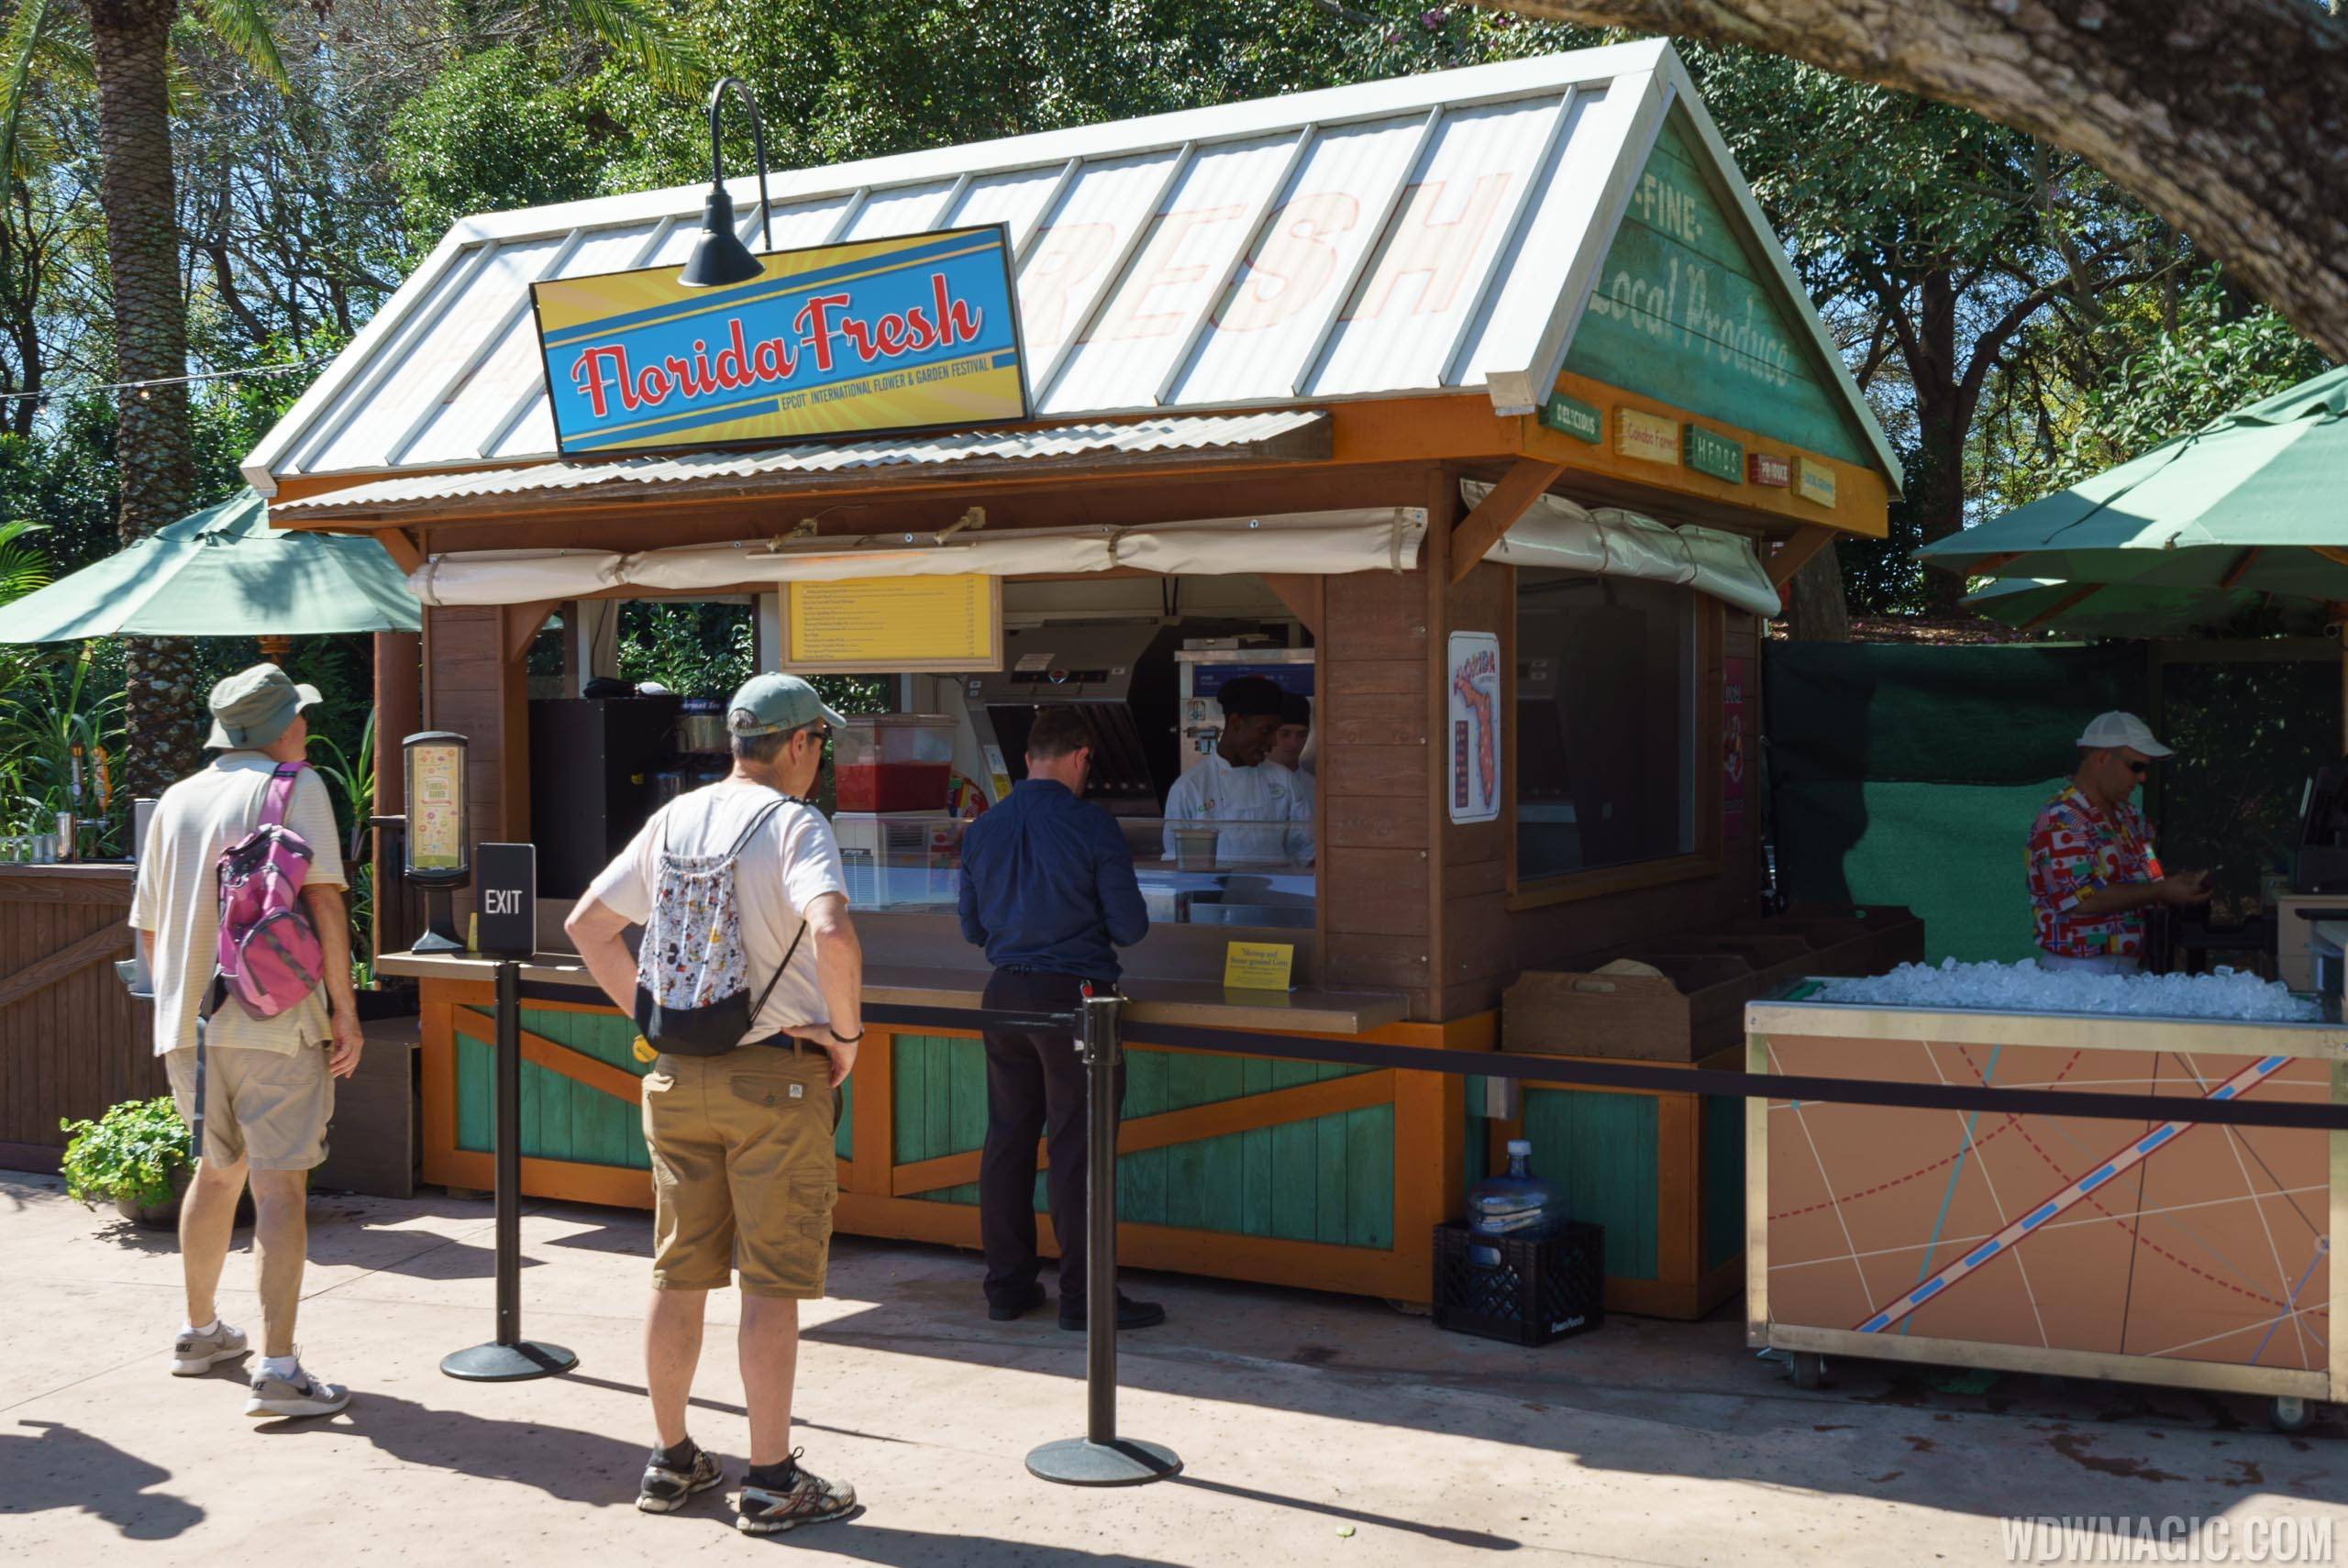 2017 Epcot Flower and Garden Festival Outdoor Kitchen kiosks - Florida Fresh kiosk